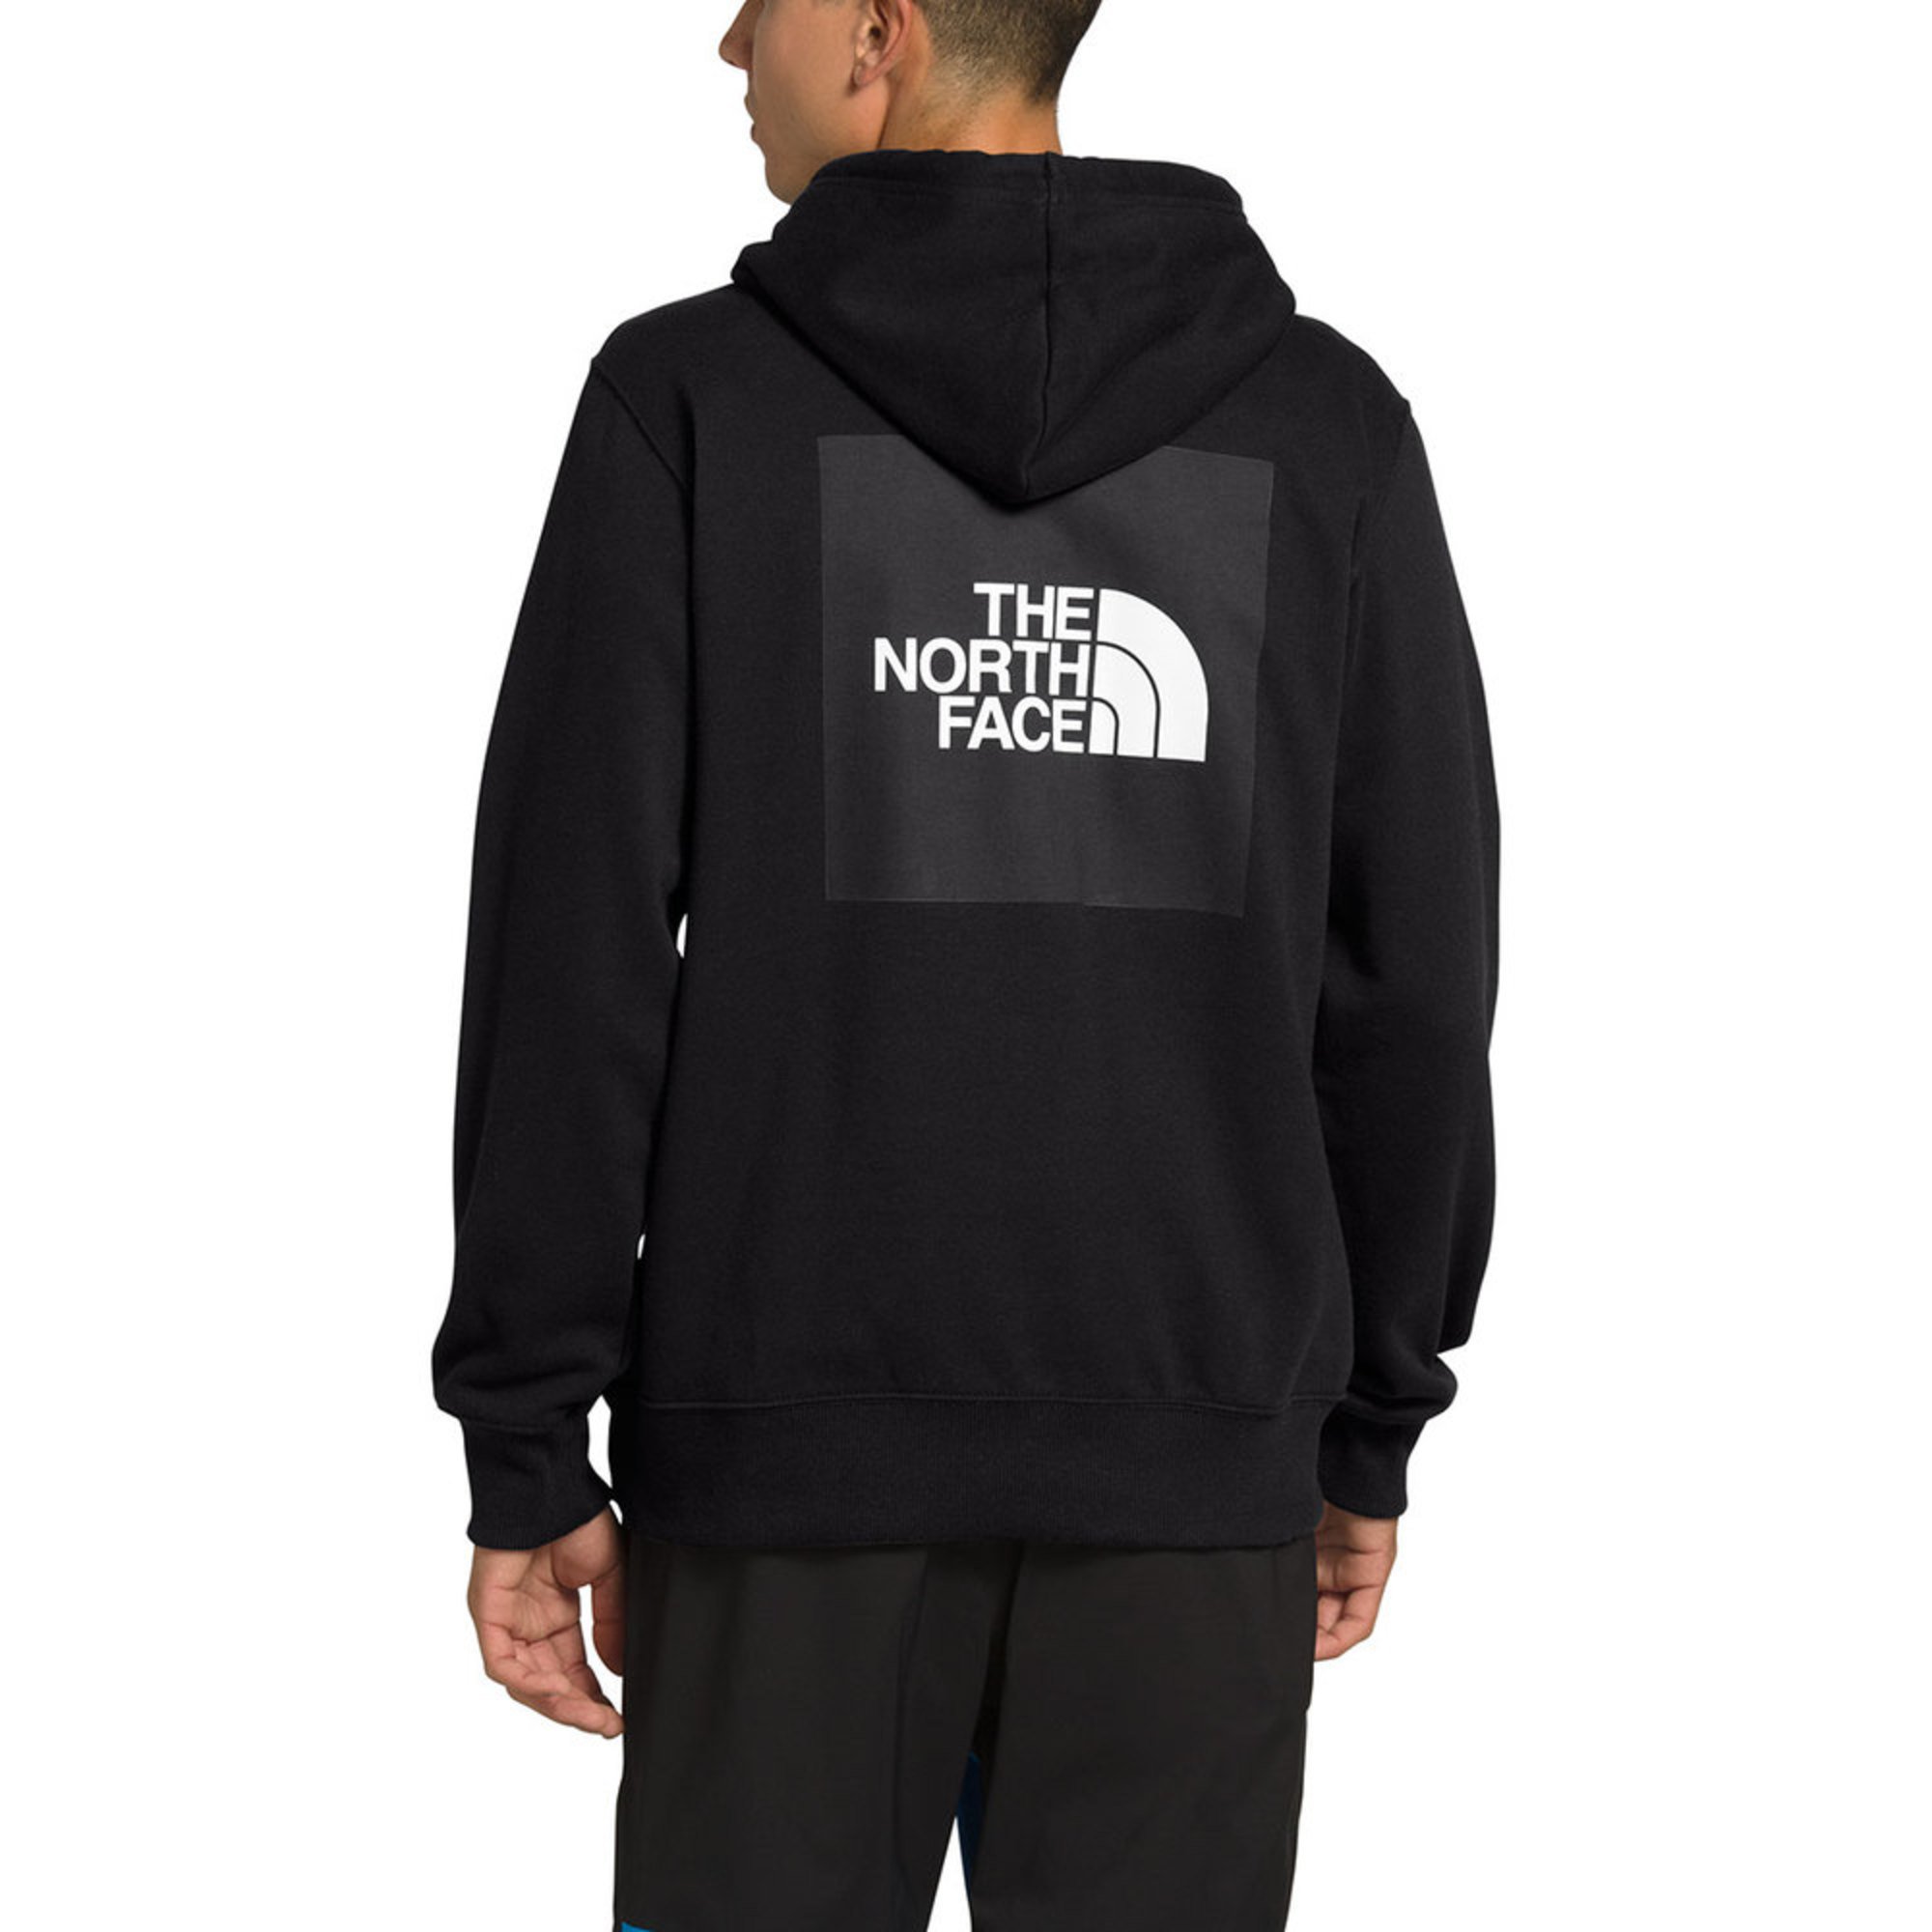 North Face Mens 2.0 Box Pull Over Hoodie | Outdoor Hoodies & Fleece ...